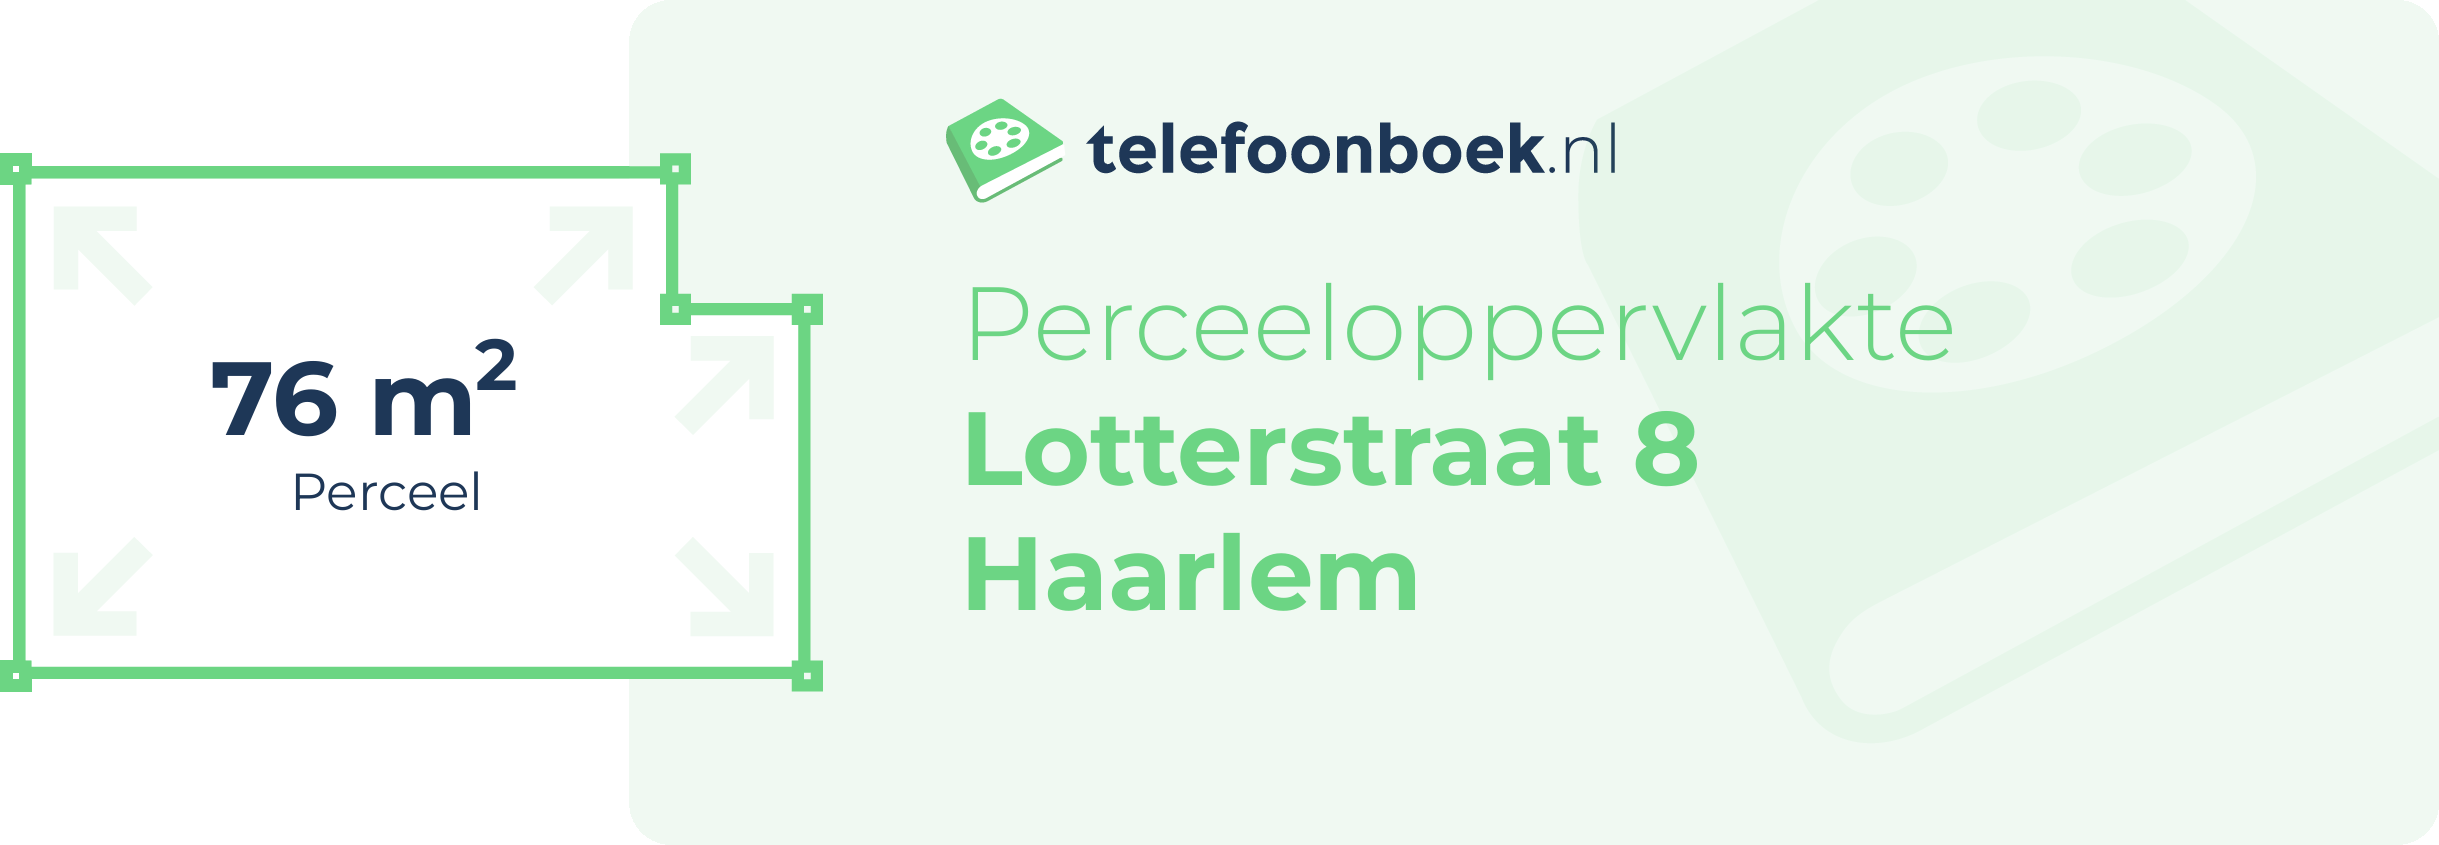 Perceeloppervlakte Lotterstraat 8 Haarlem